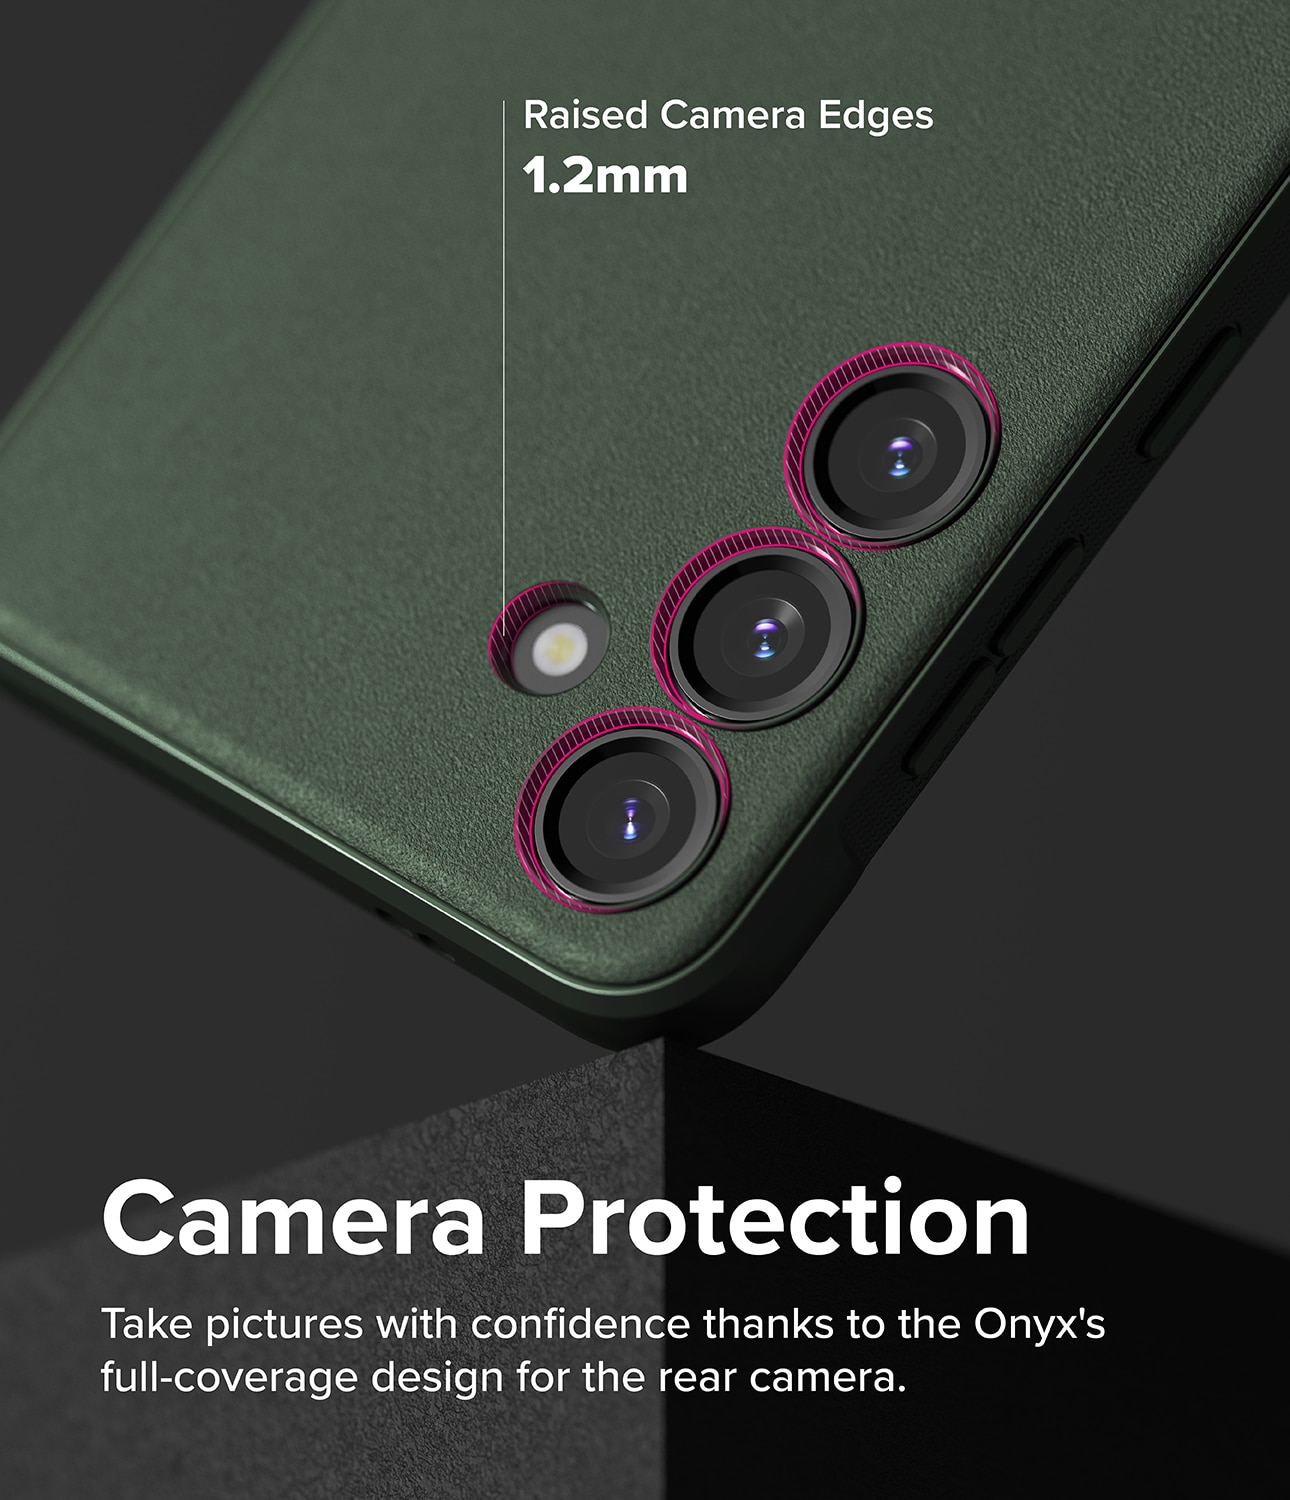 Samsung Galaxy S24 Onyx Case Dark Green